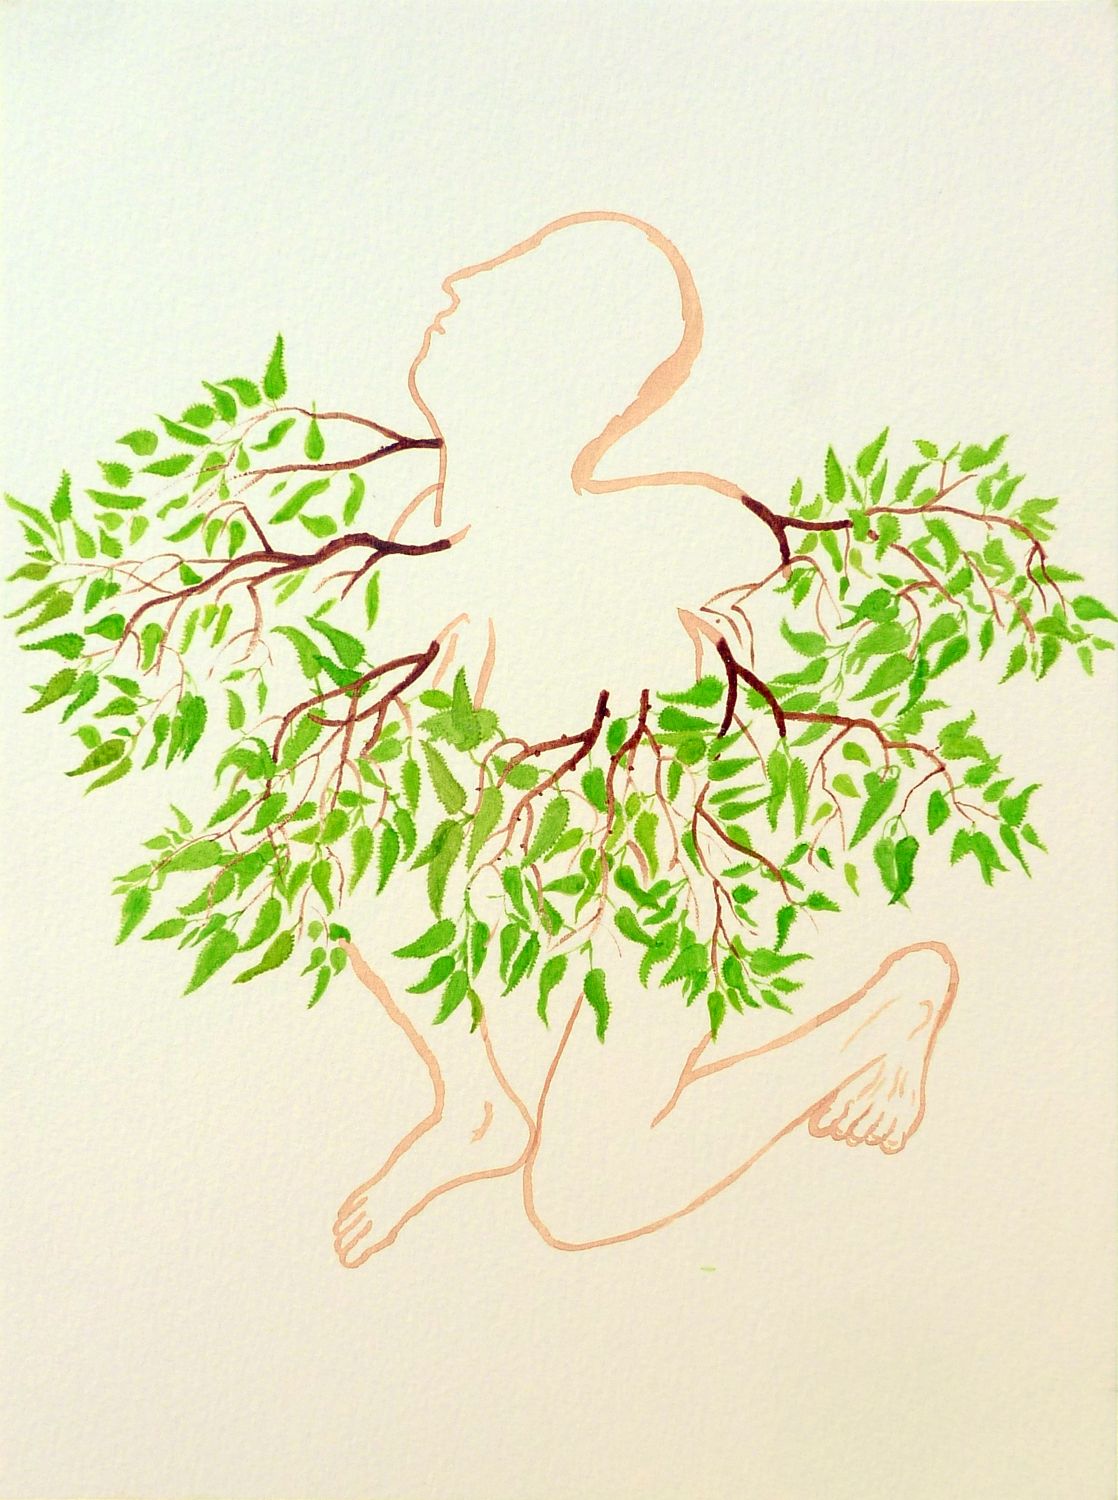 Jan Karpíšek: The Coat of Branches, watercolor on paper, 30x21 cm, 2014